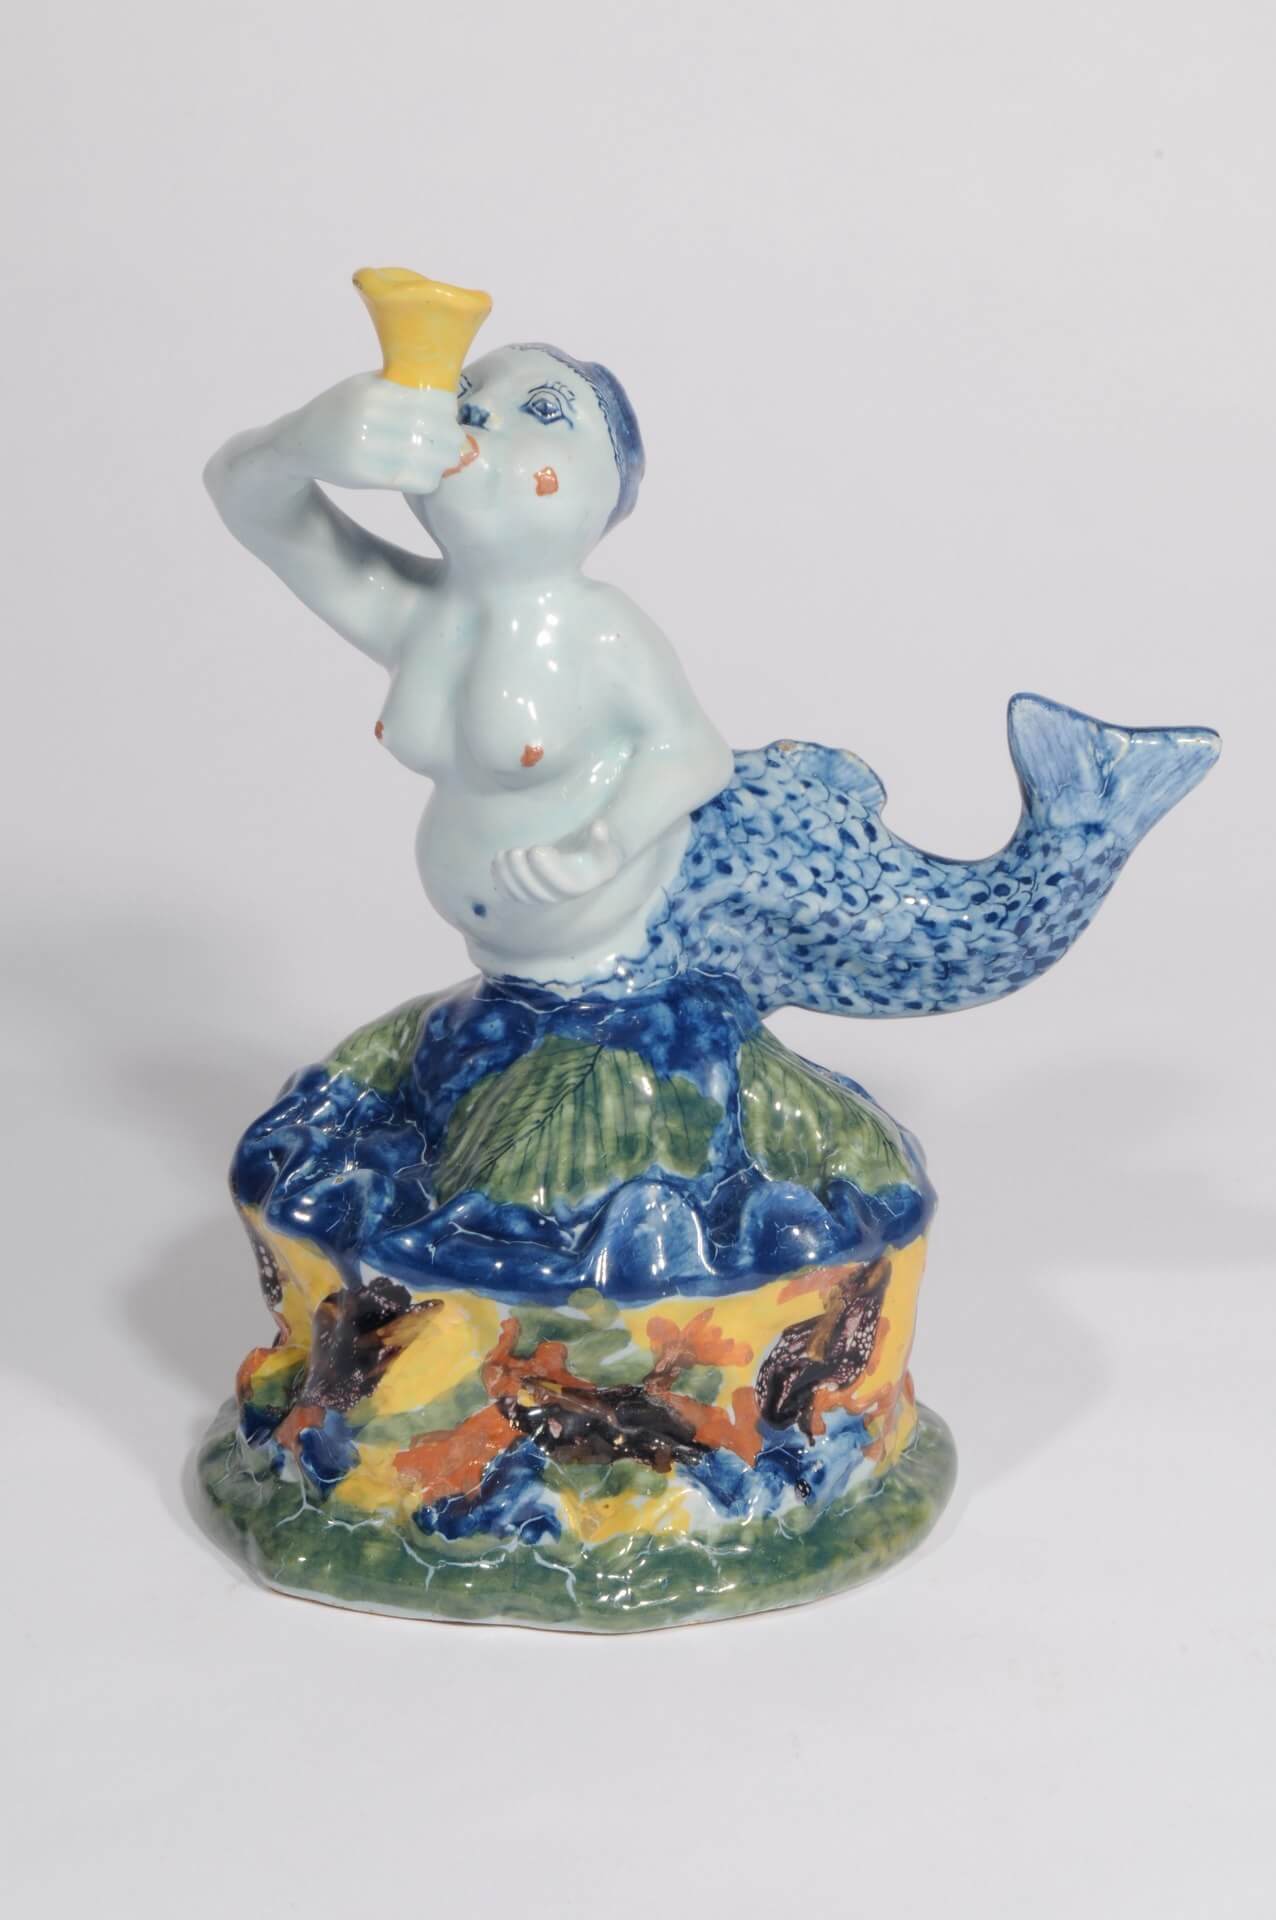 Polychrome figurine of mermaid